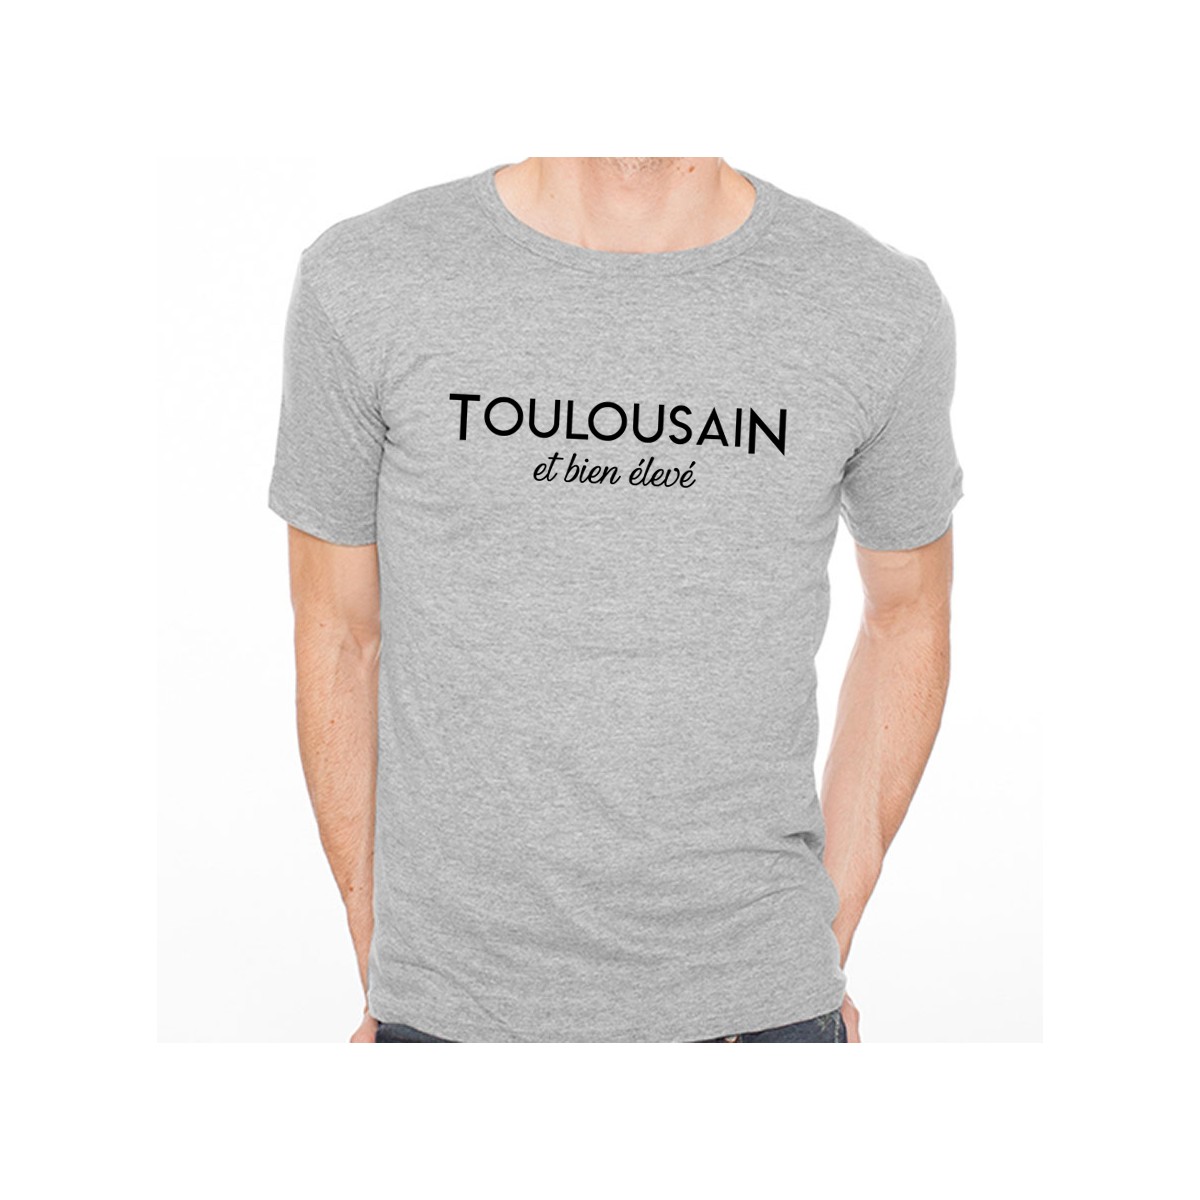 T-shirt Toulousain et bien élevé